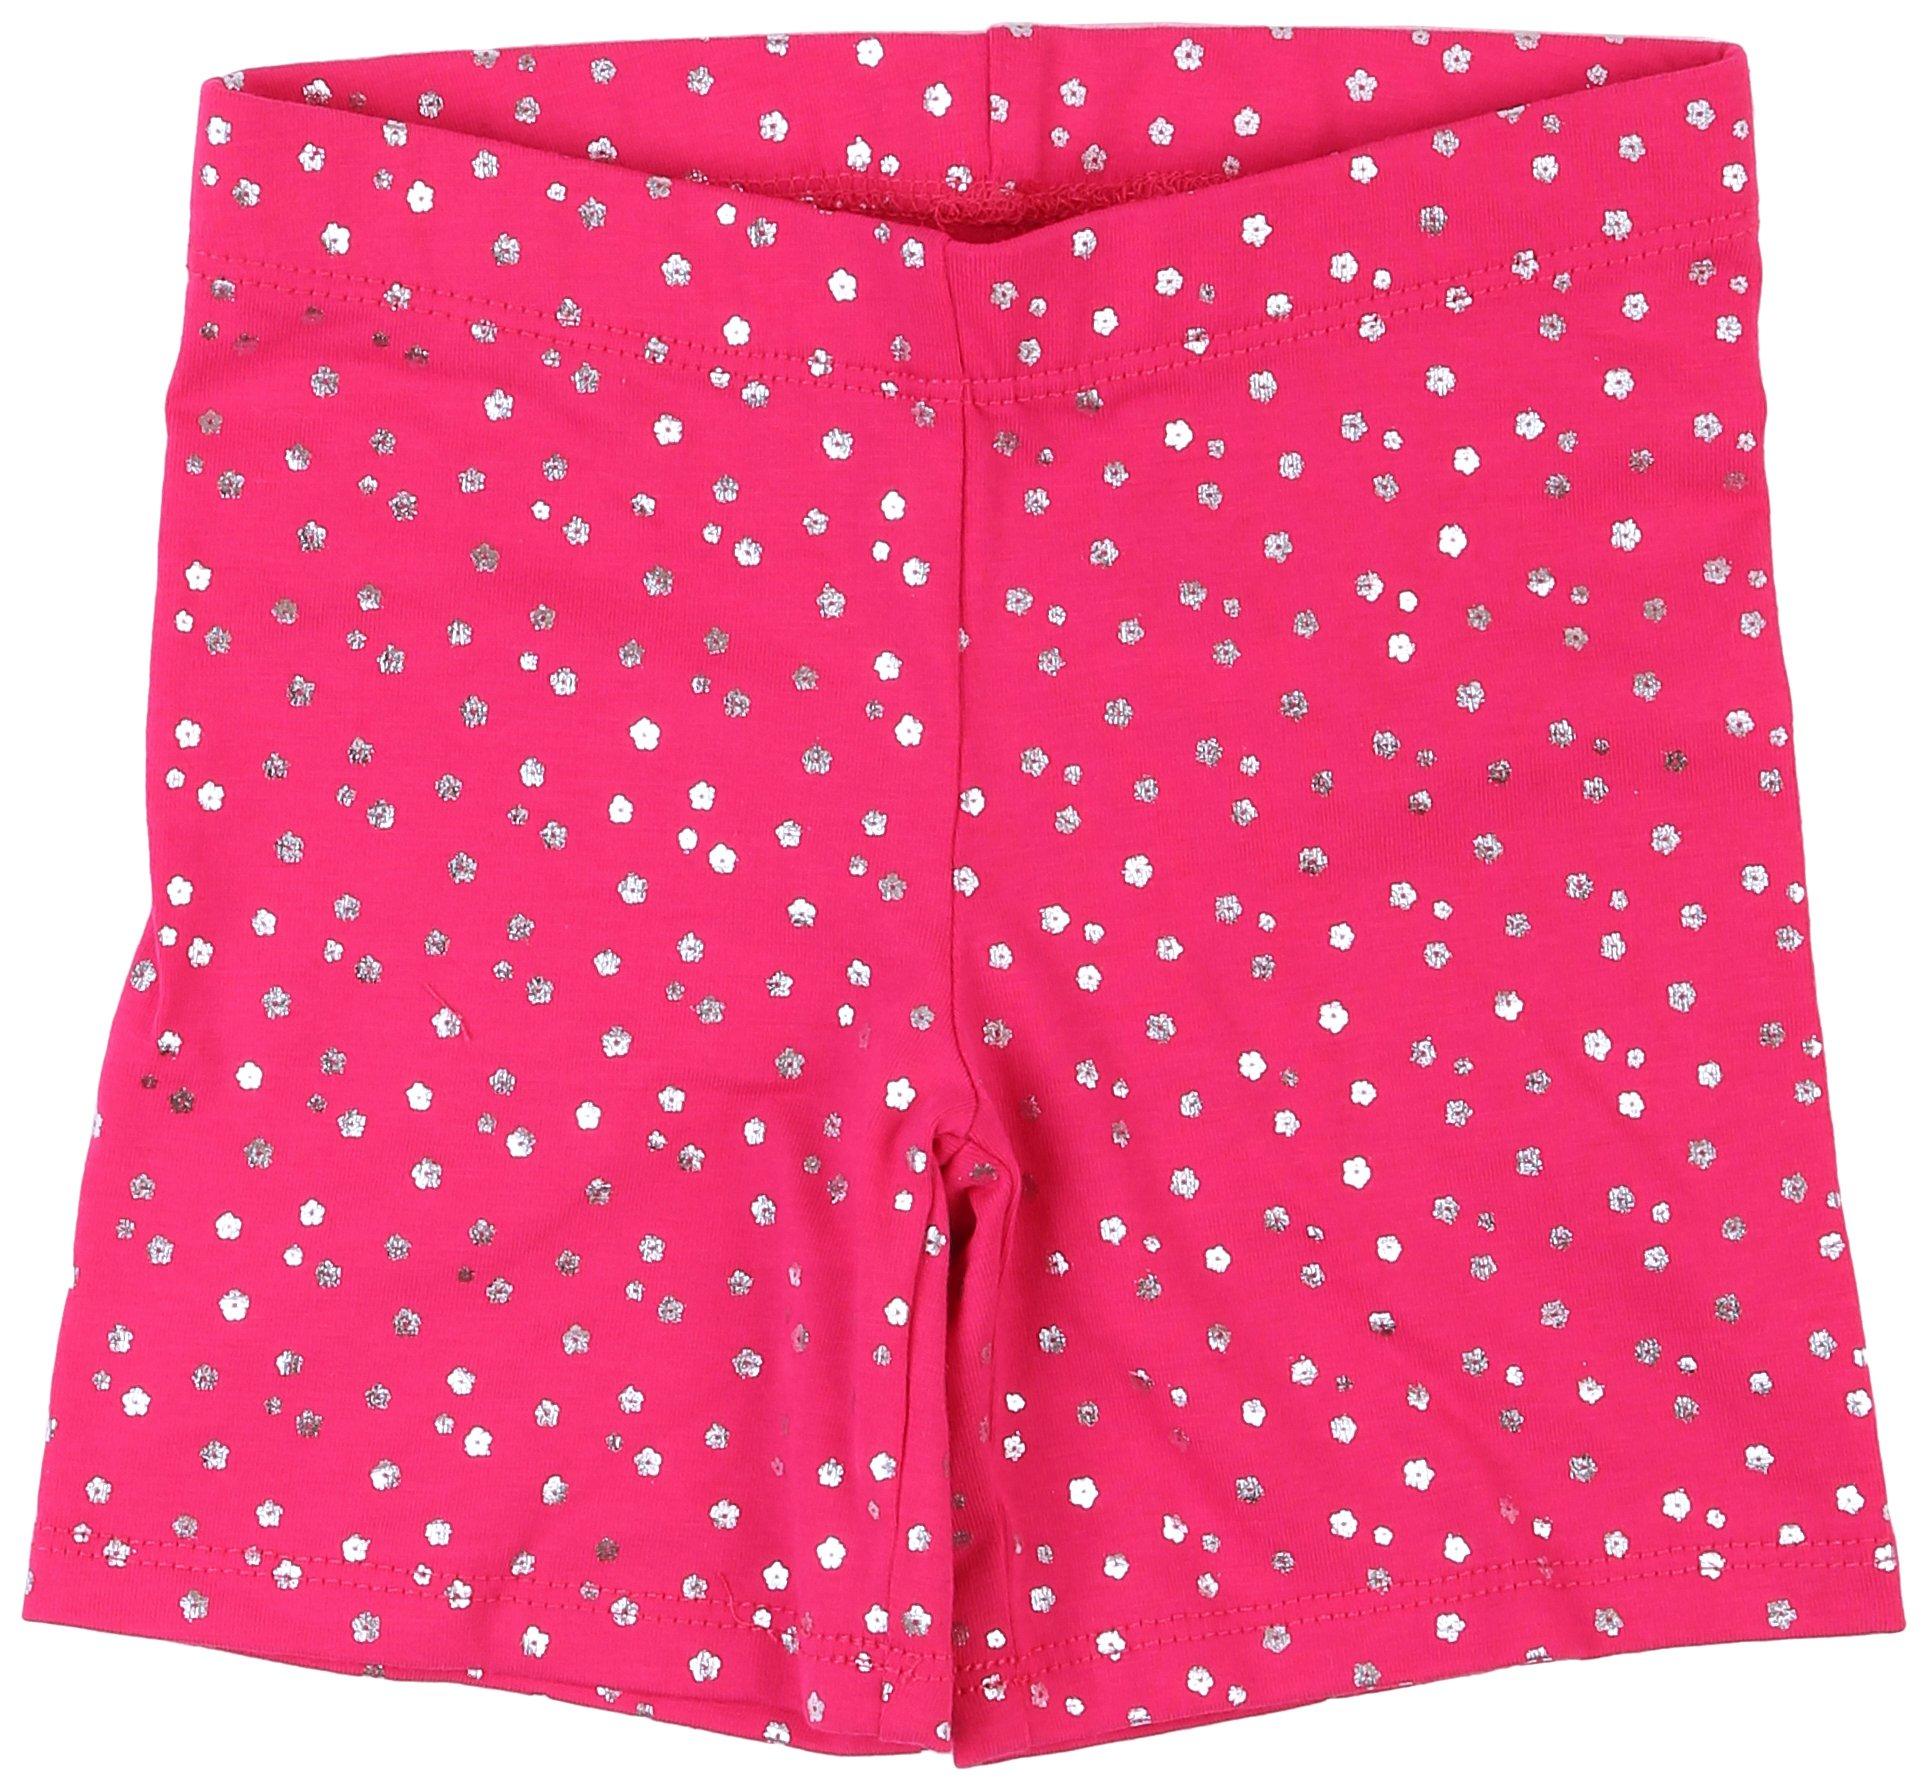 DOT & ZAZZ Big Girls Sparkle Foil Flower Shorts